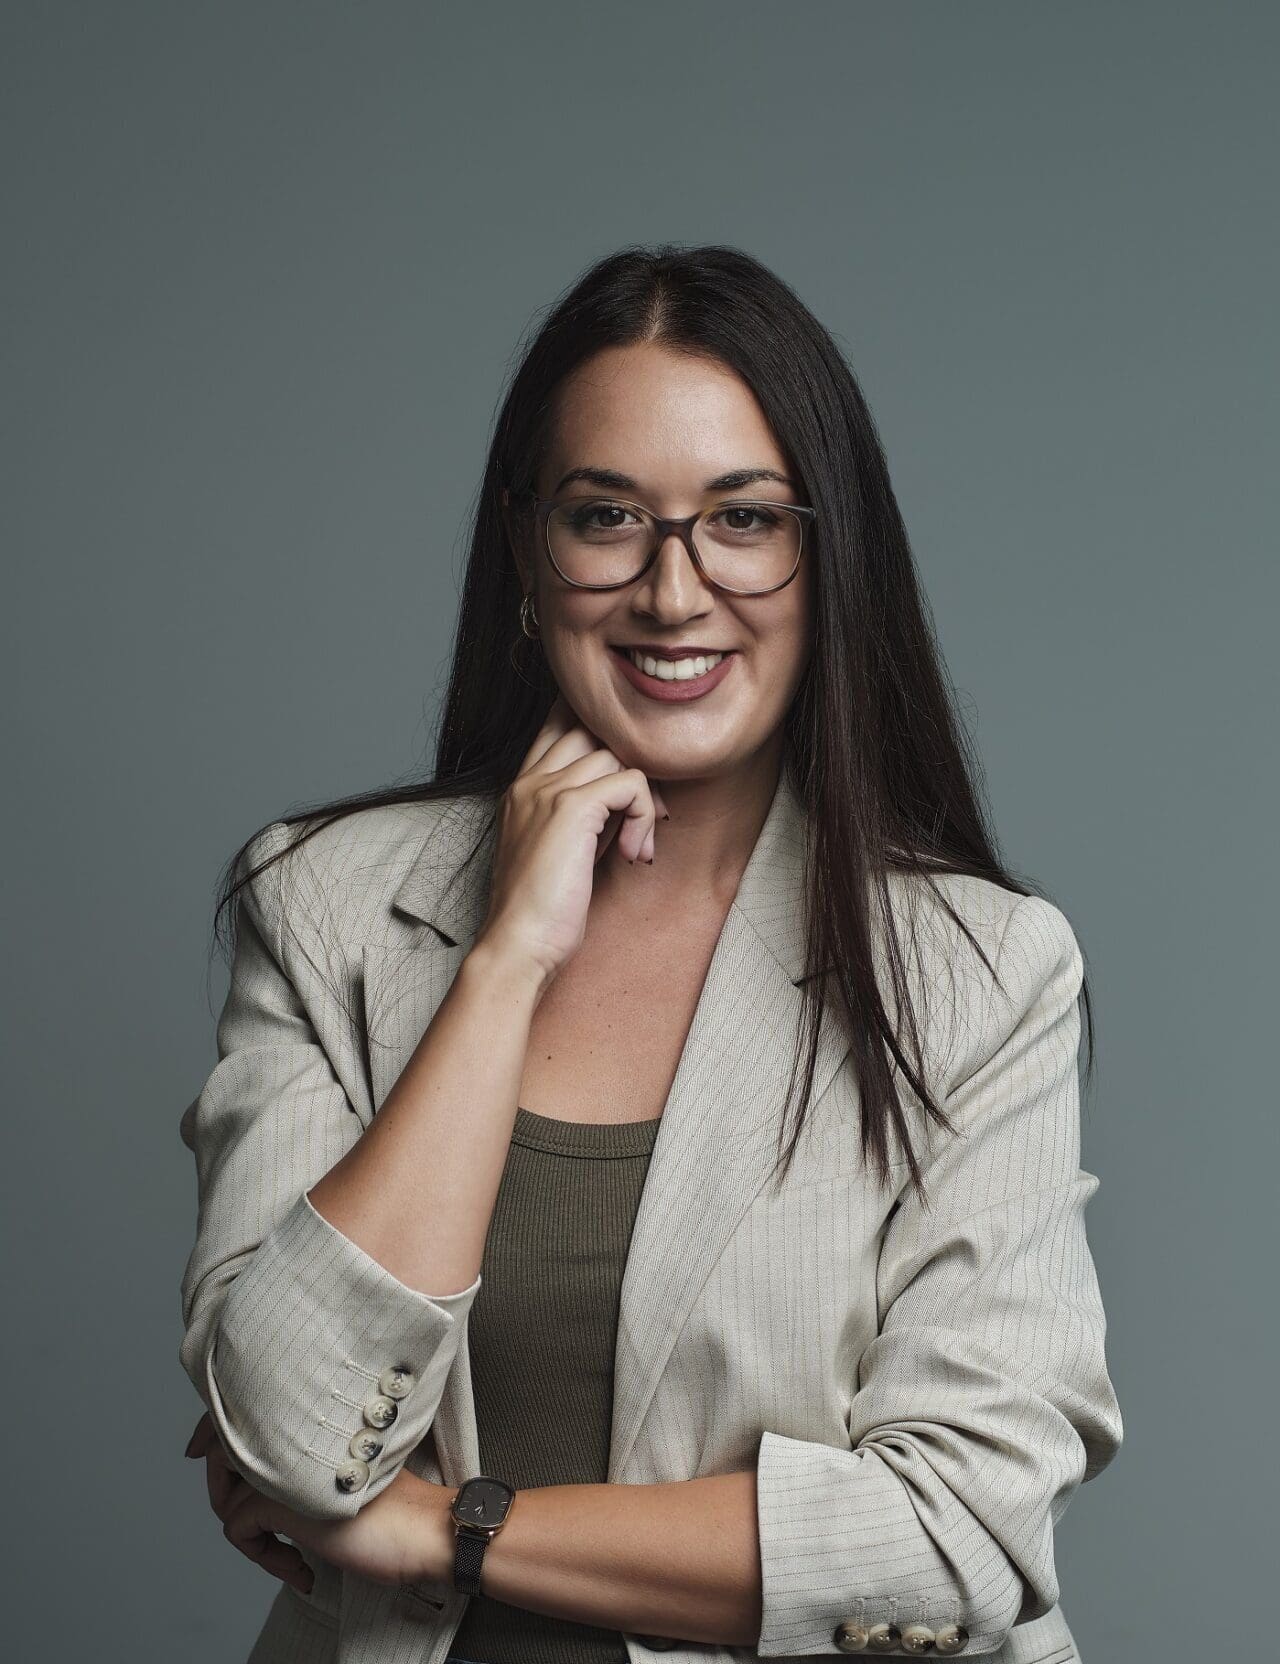 Marta Jovančić - Employer Branding Specialist, LPP Serbia